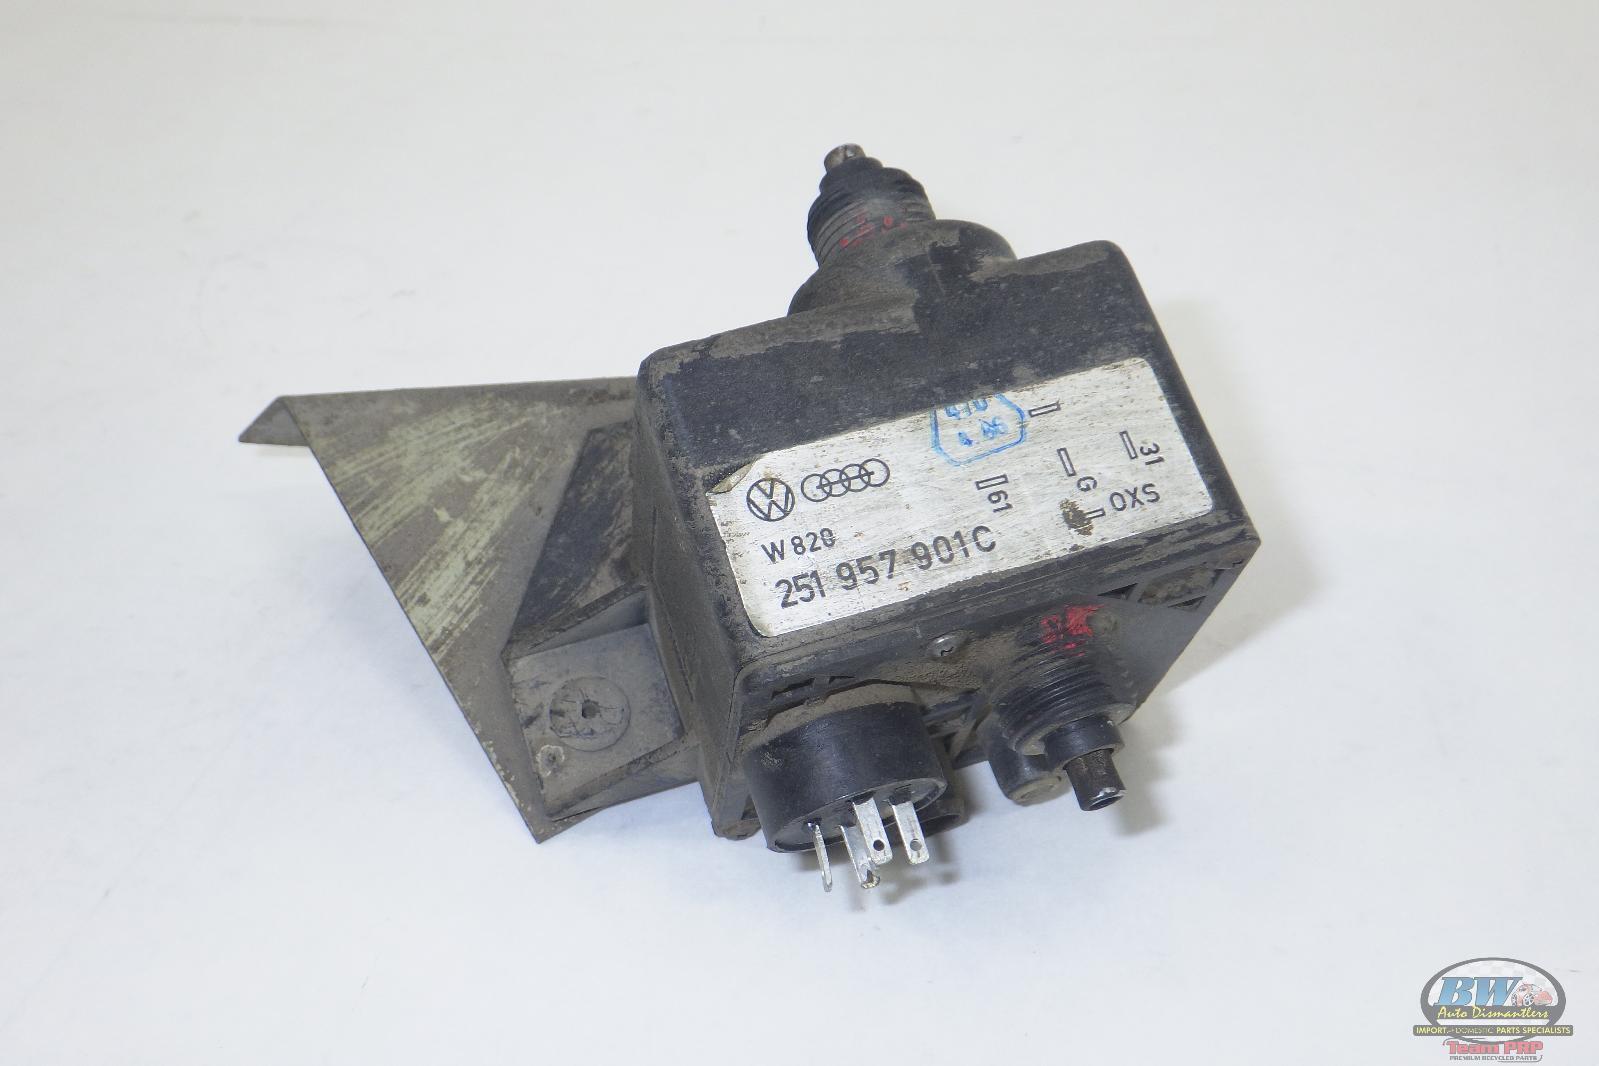 251-957-901C; VW VANAGON OEM Speedometer Counter Box 1980-92